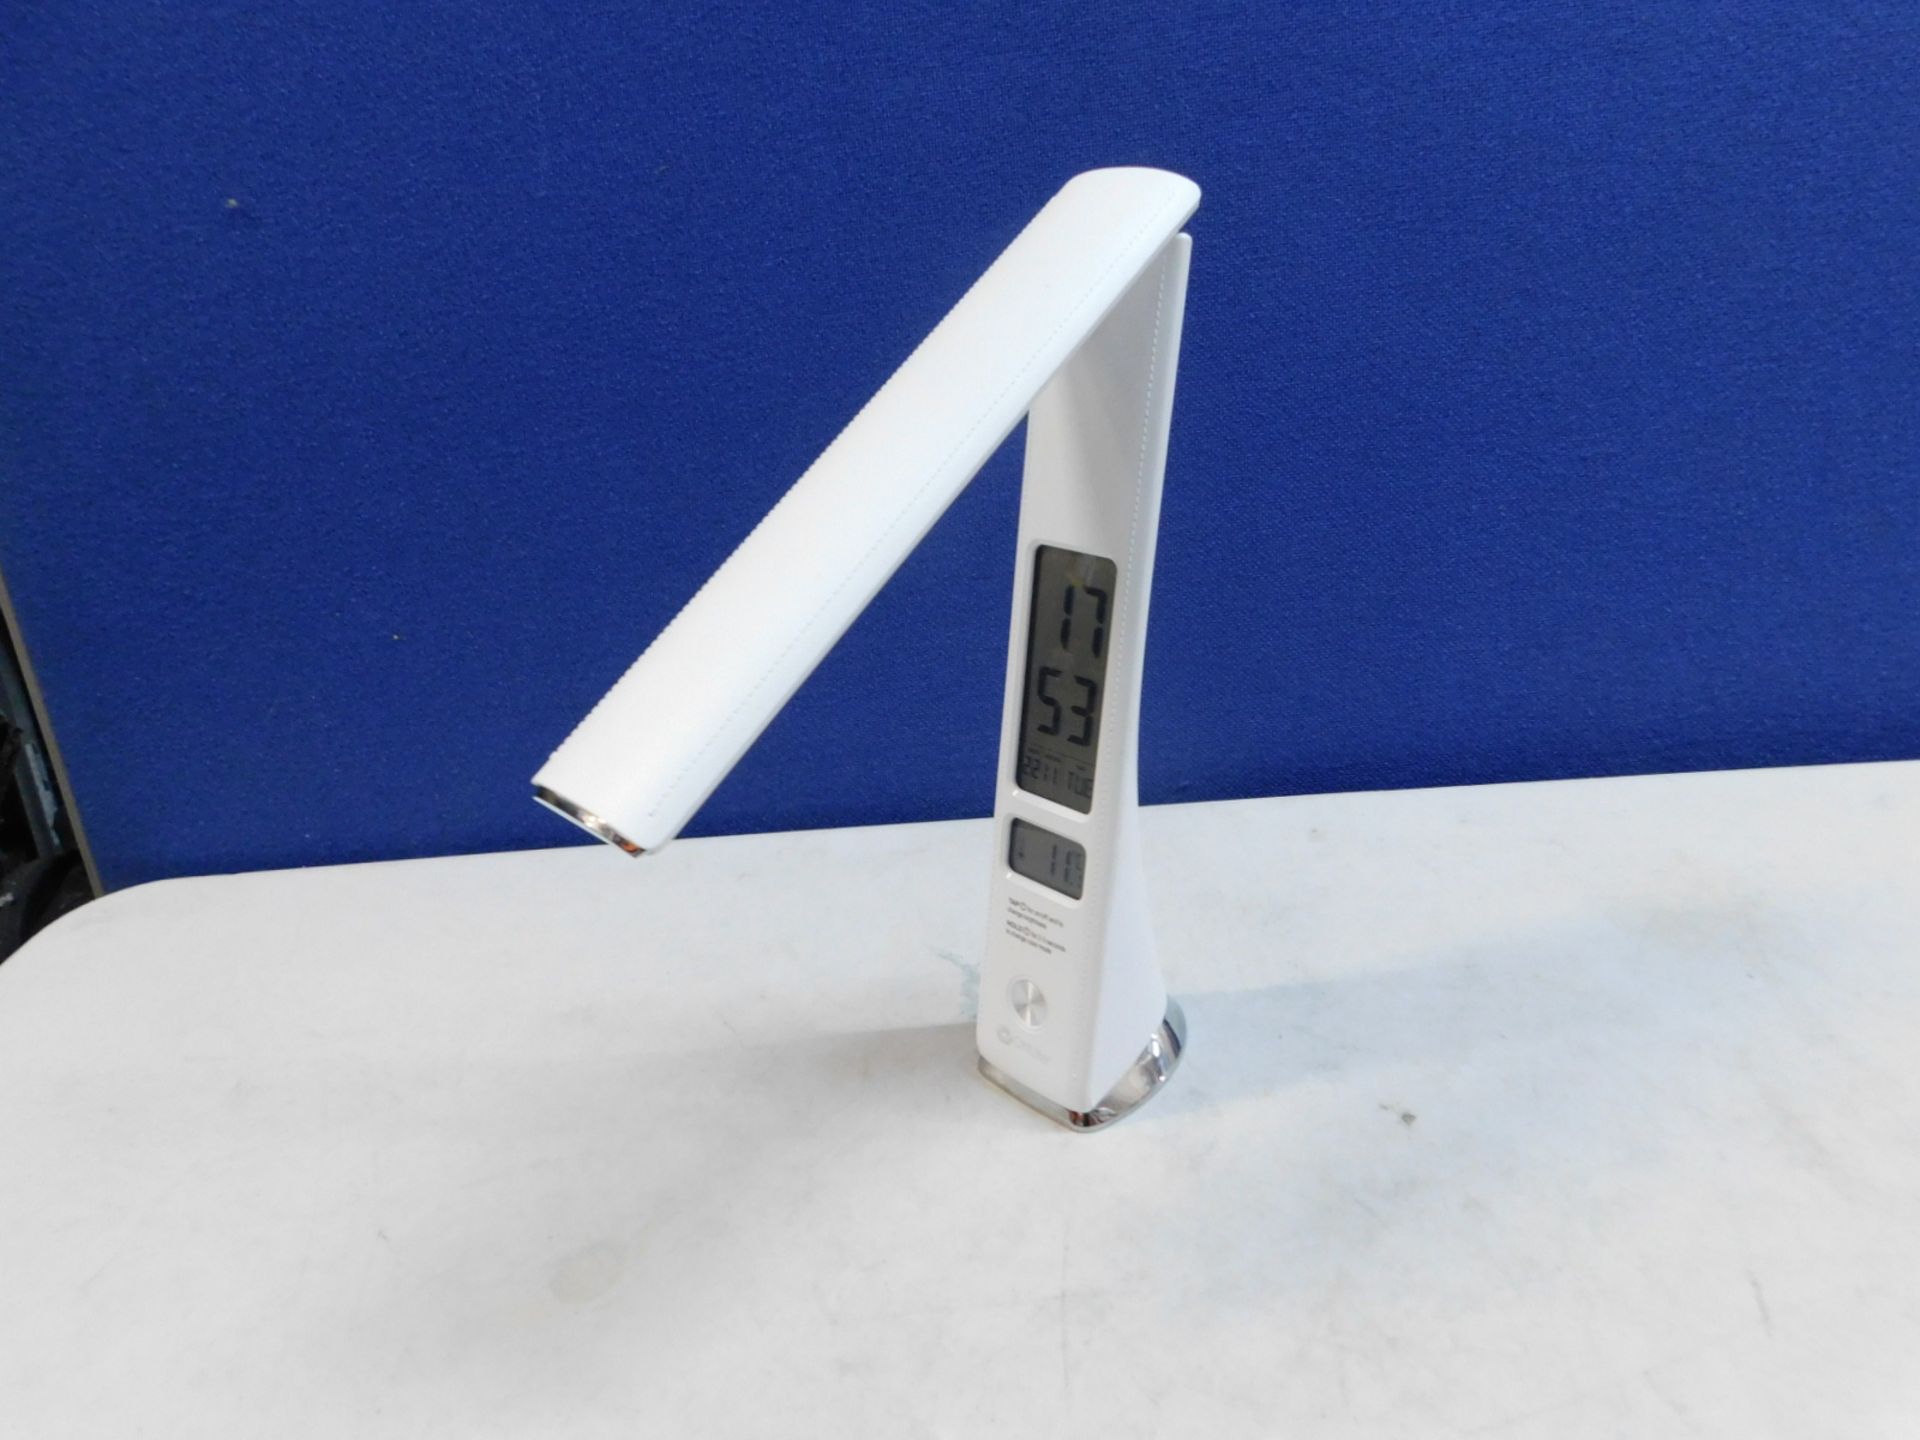 1 OTTLITE LED DESK LAMP WITH DIGITAL LCD DISPLAY RRP Â£49.99